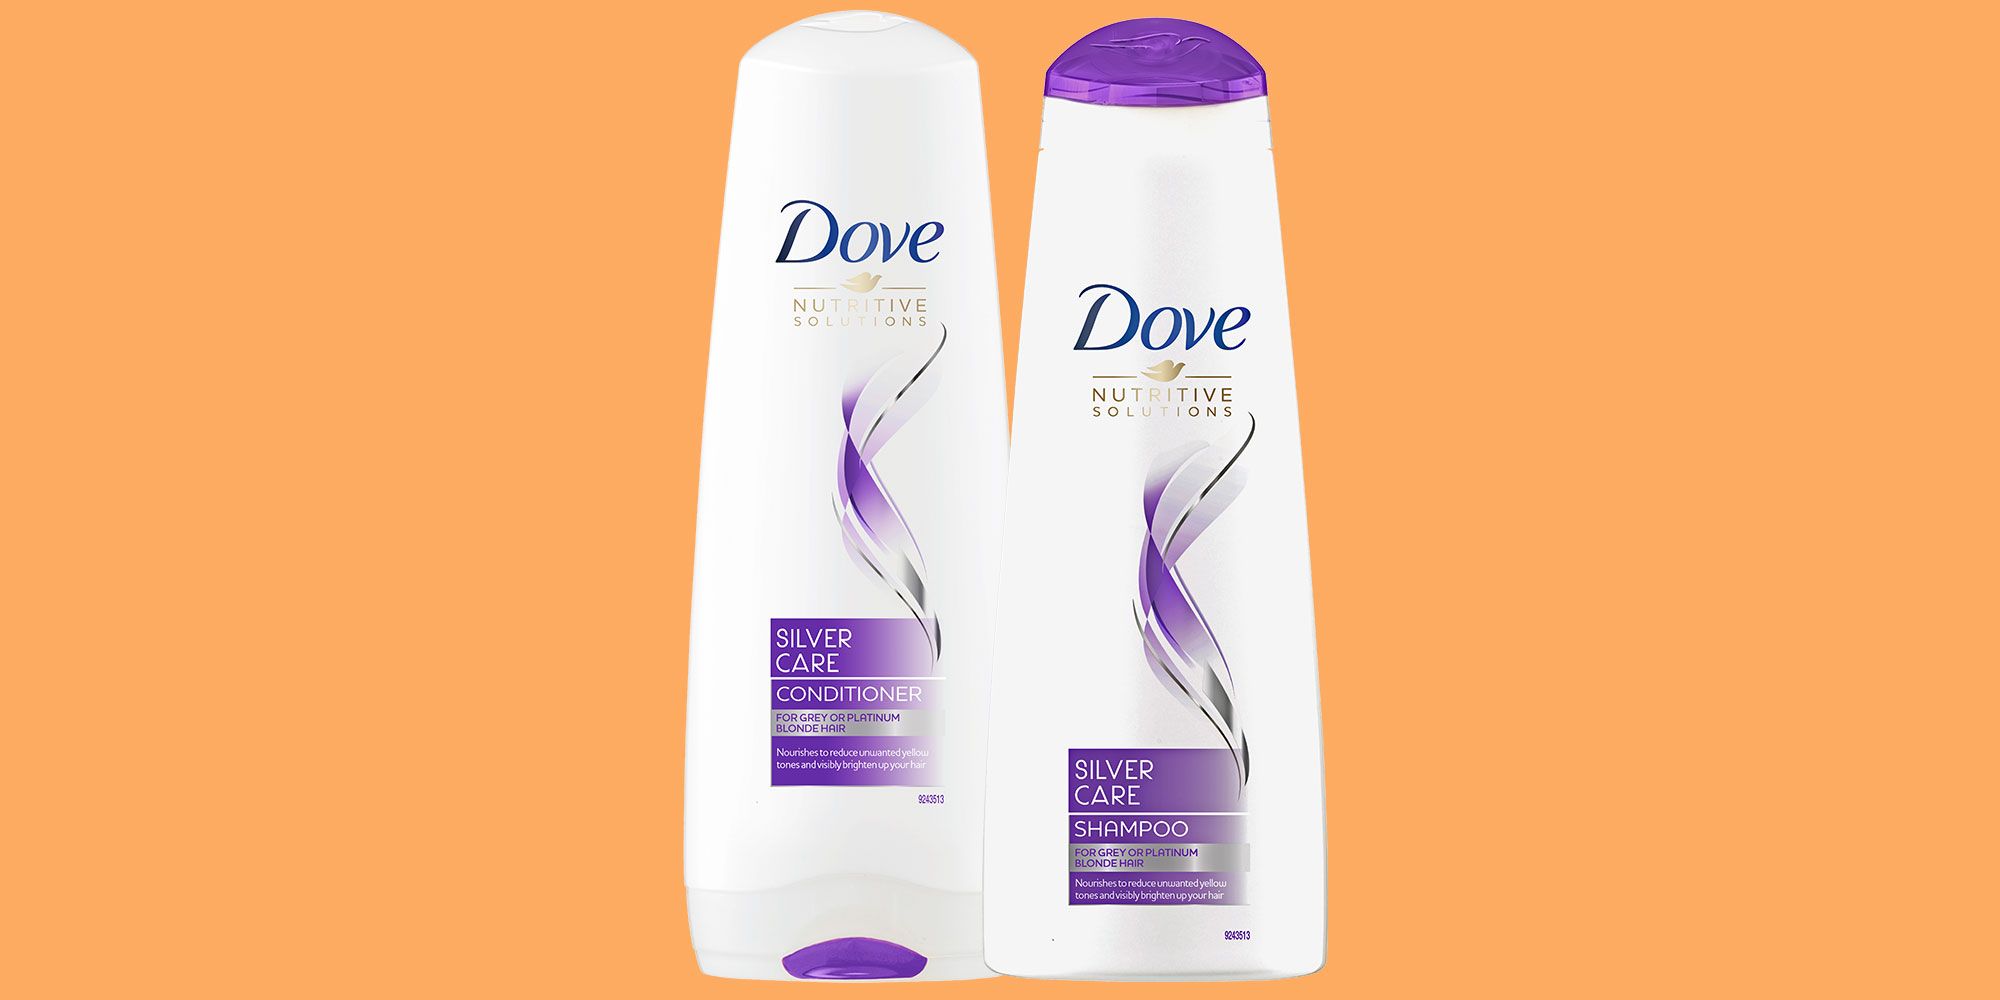 Dove Silver Care Shampoo And Conditioner Review